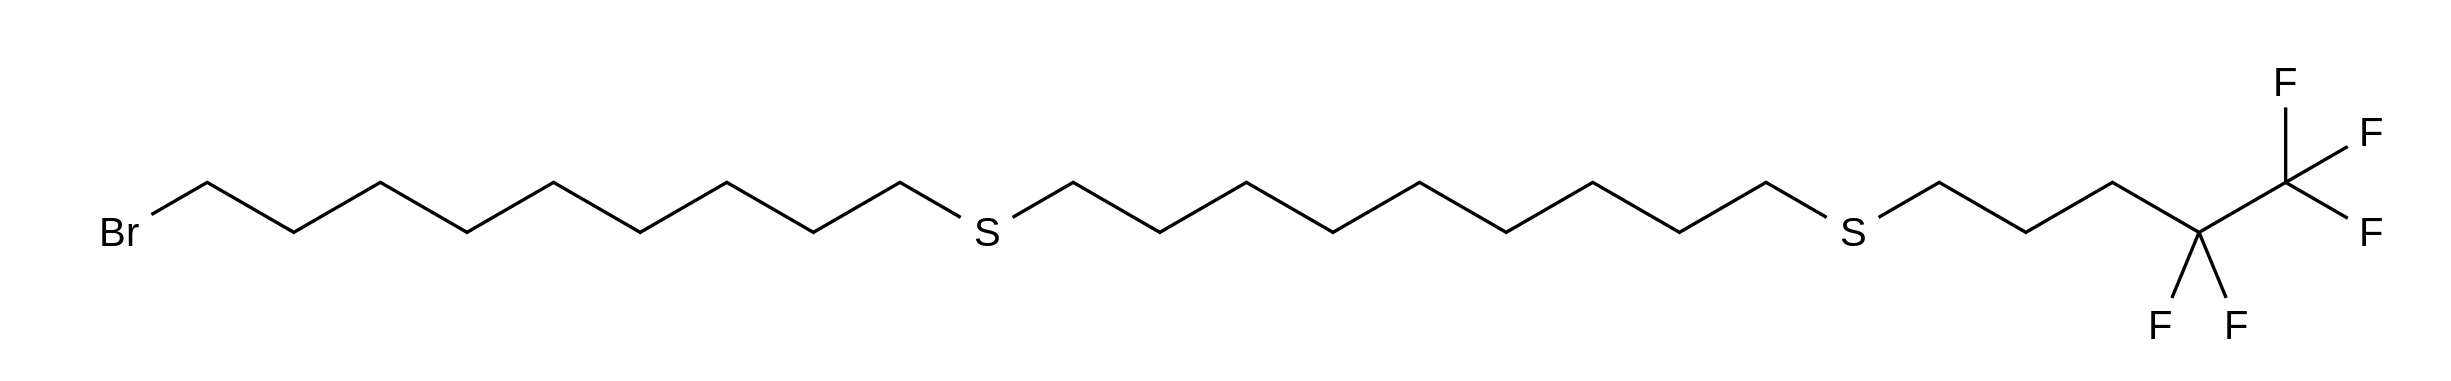 9-[[9-[(4,4,5,5,5-Pentafluoropentyl)sulfenyl]nonyl]sulfenyl]nonyl Bromide